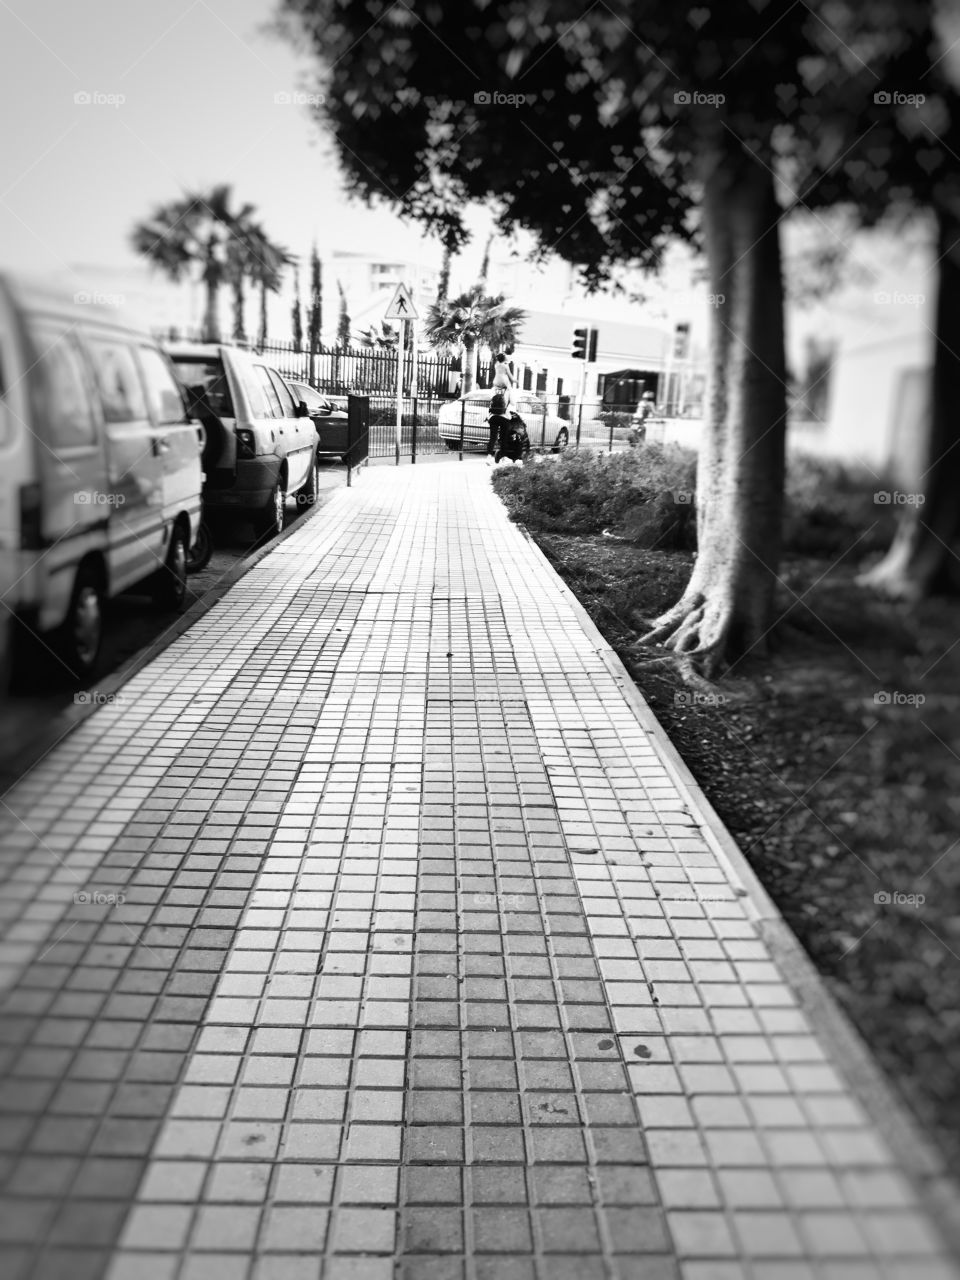 #pavement #road #street